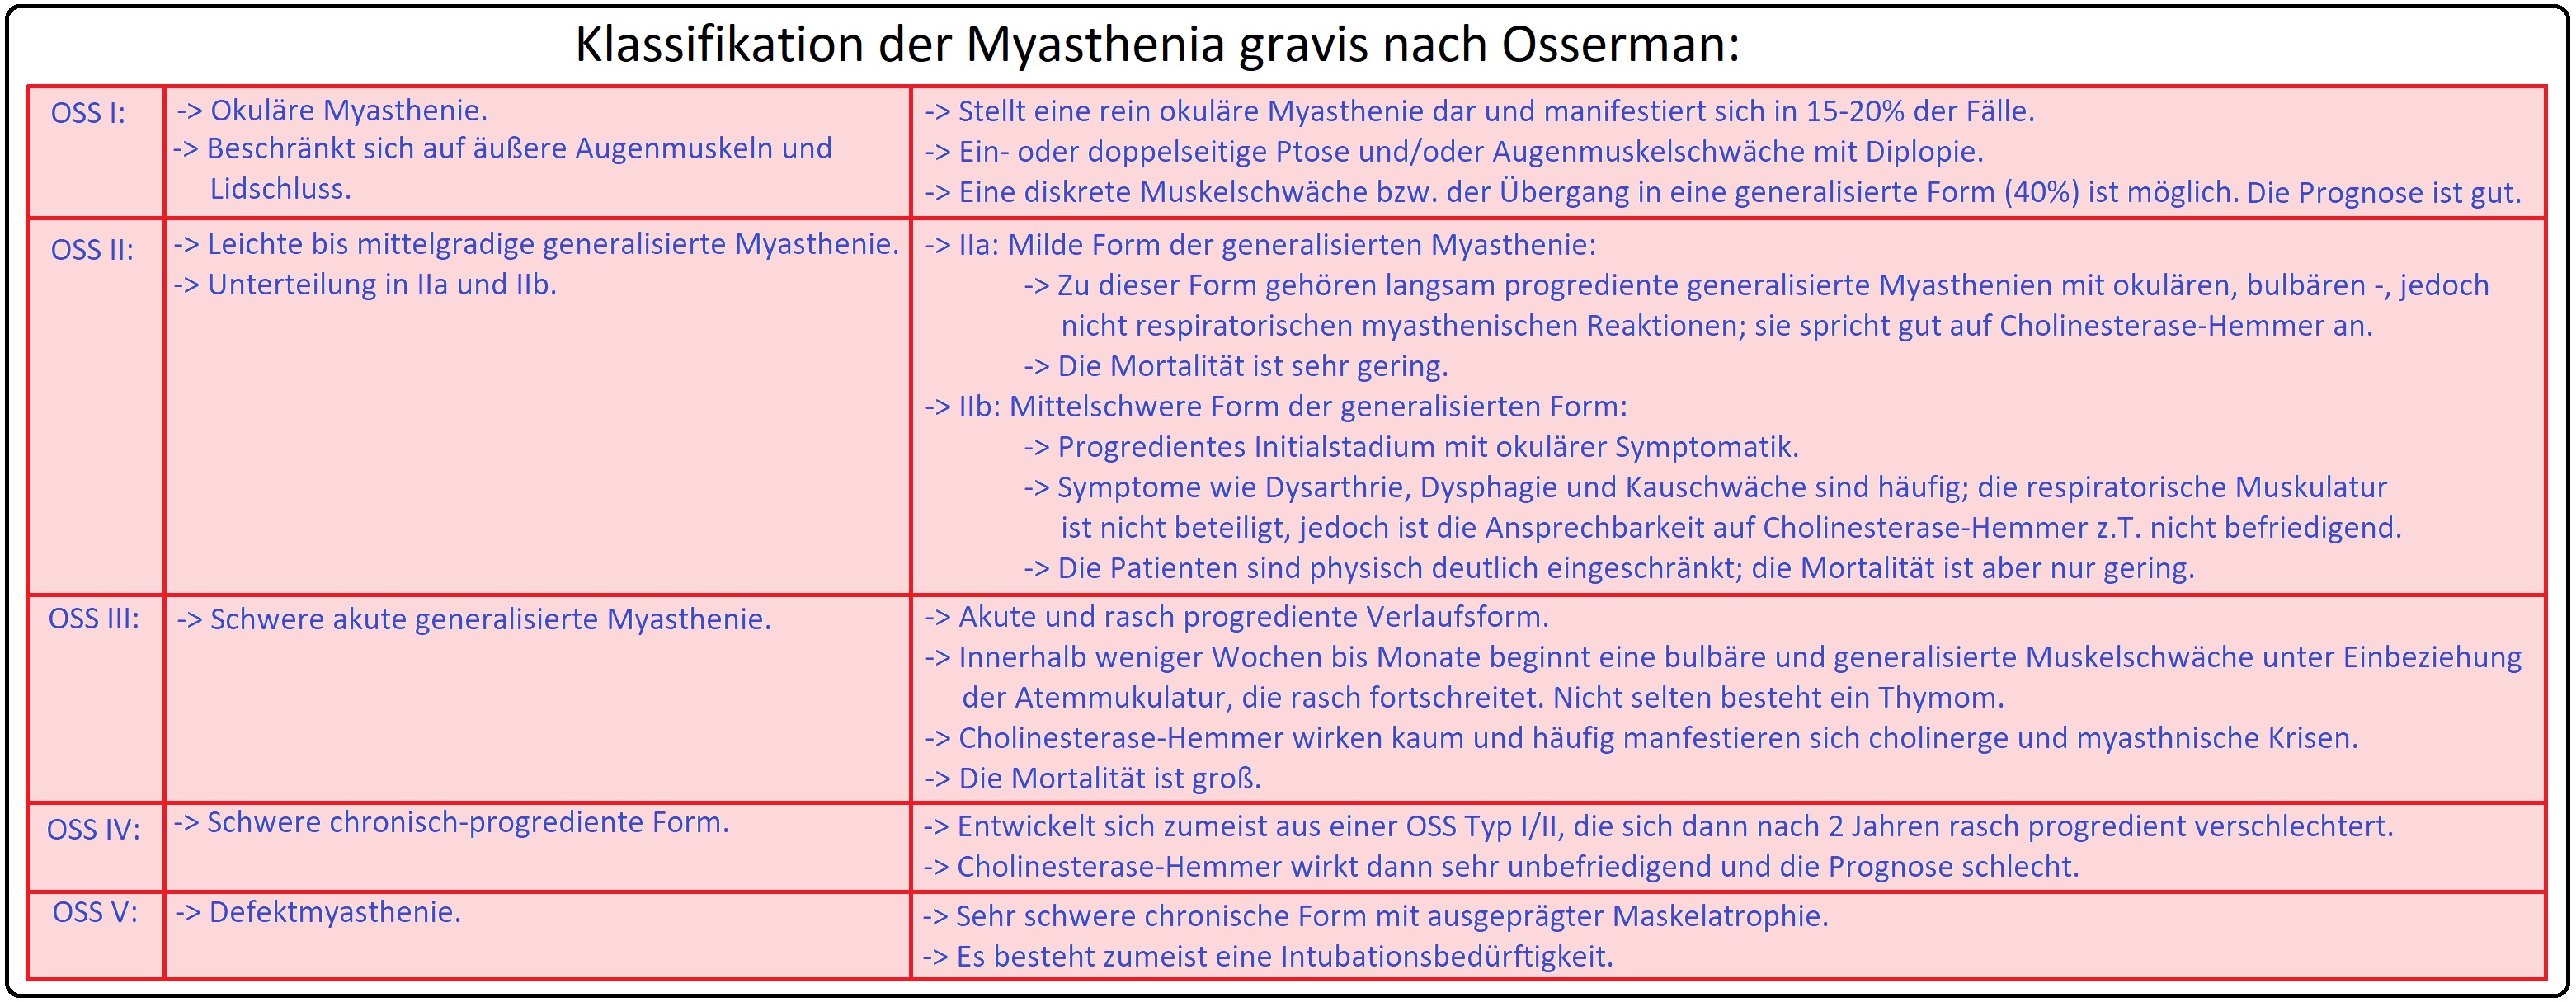 062 Klassifikation der Myasthenia gravis nach Osserman